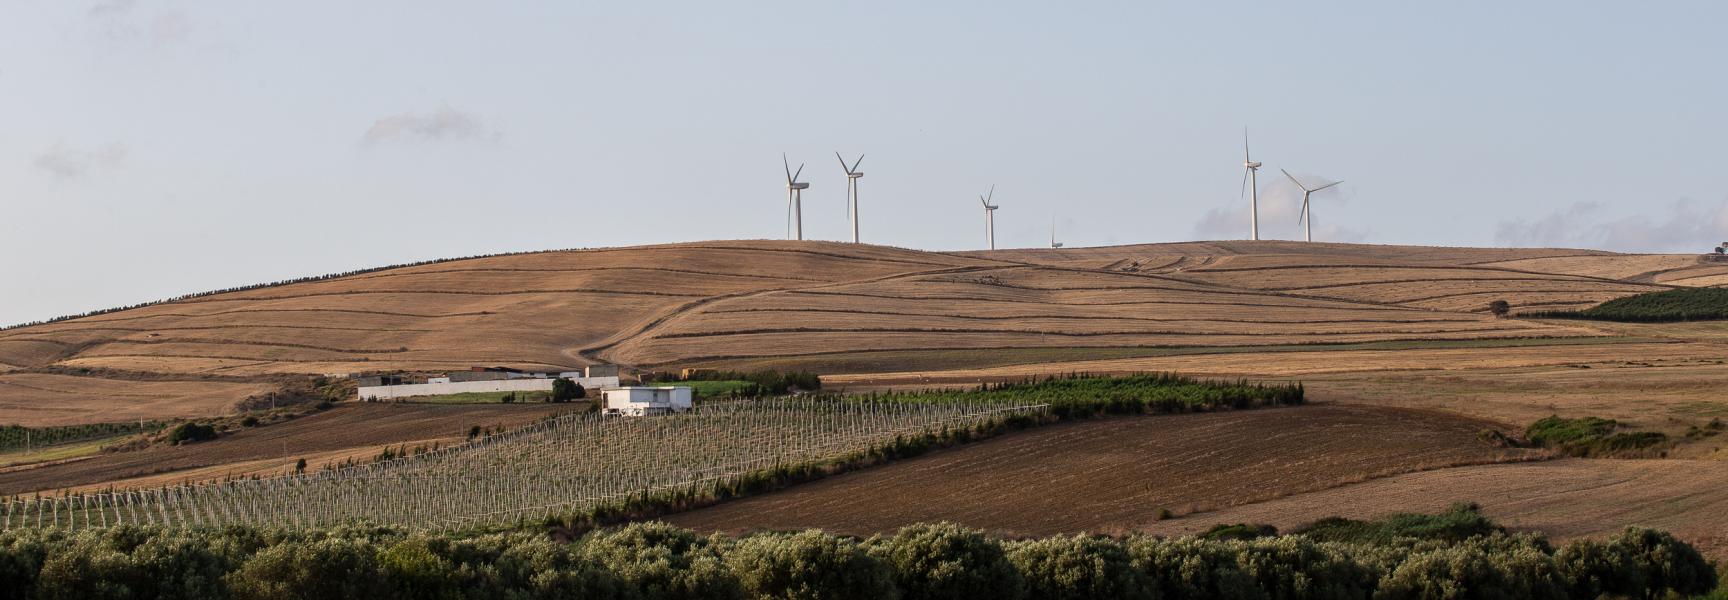 Wind turbines in Tunisia